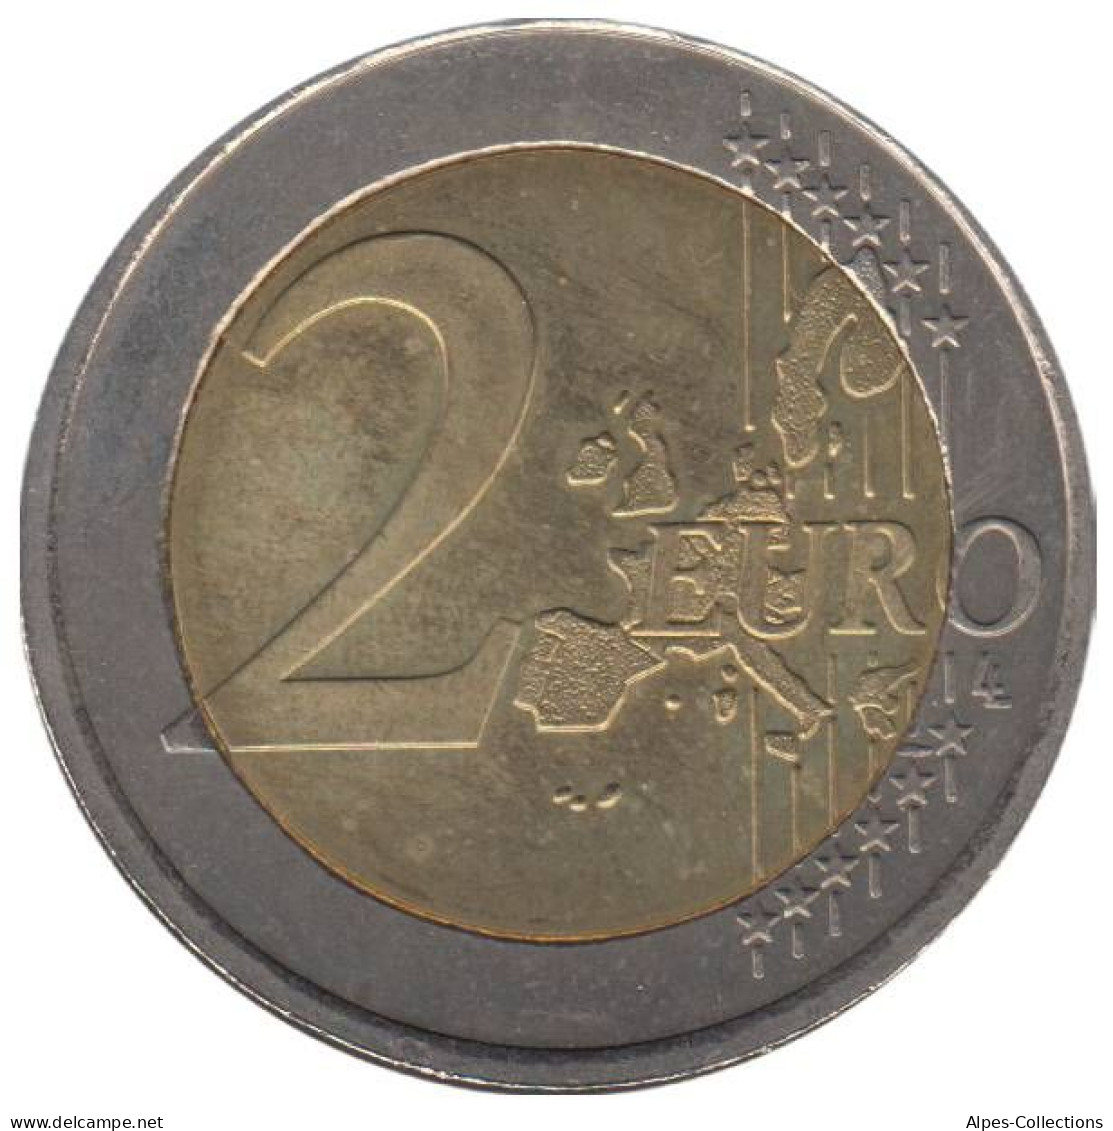 IR20005.1 - IRLANDE - 2 Euros - 2005 - Ireland